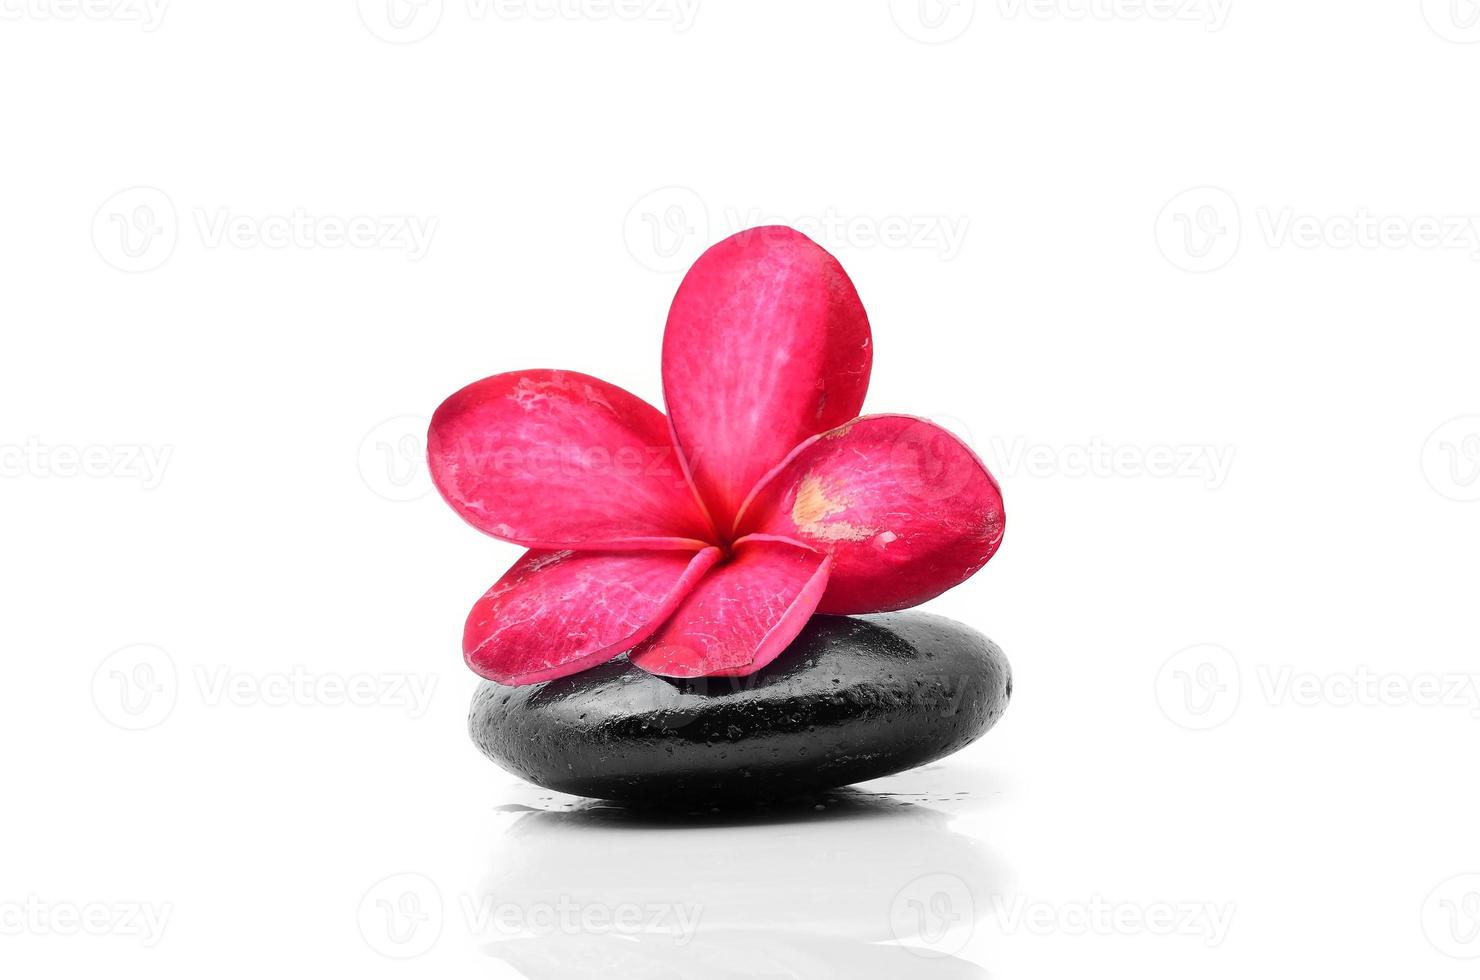 pedras zen com flor de frangipani foto